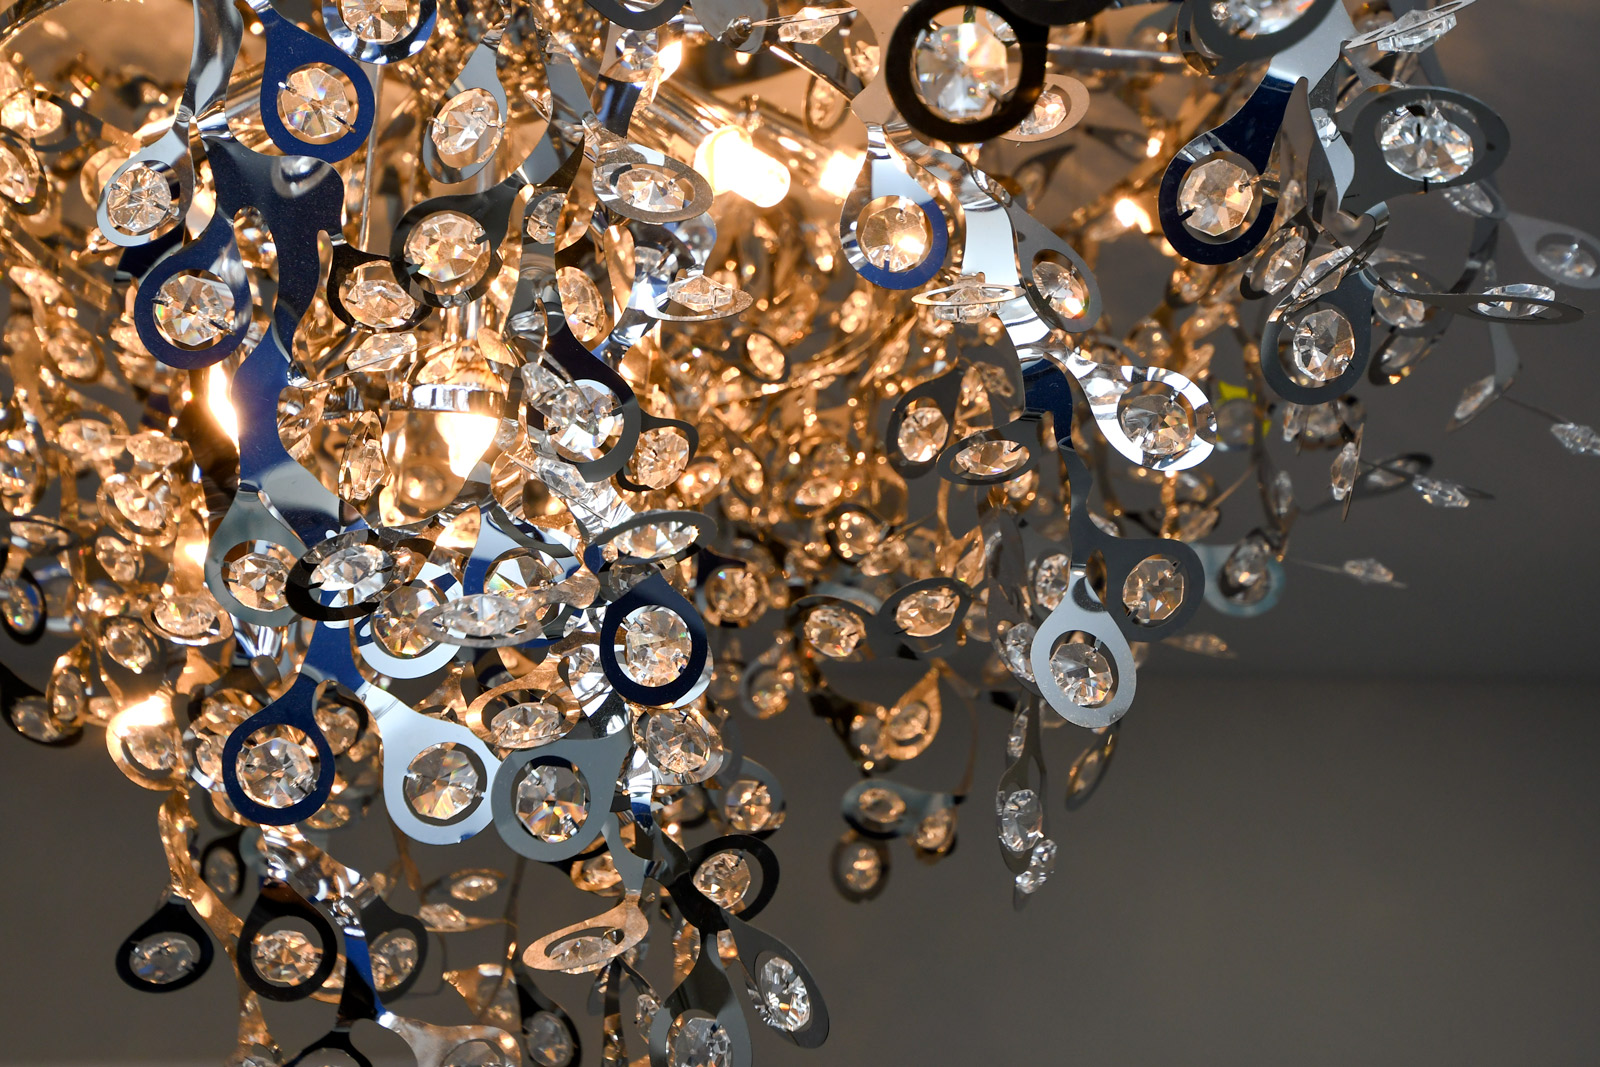 624-pearl-304-chandelier-detail - image 624-pearl-304-chandelier-detail on https://www.flatironsconstruct.com